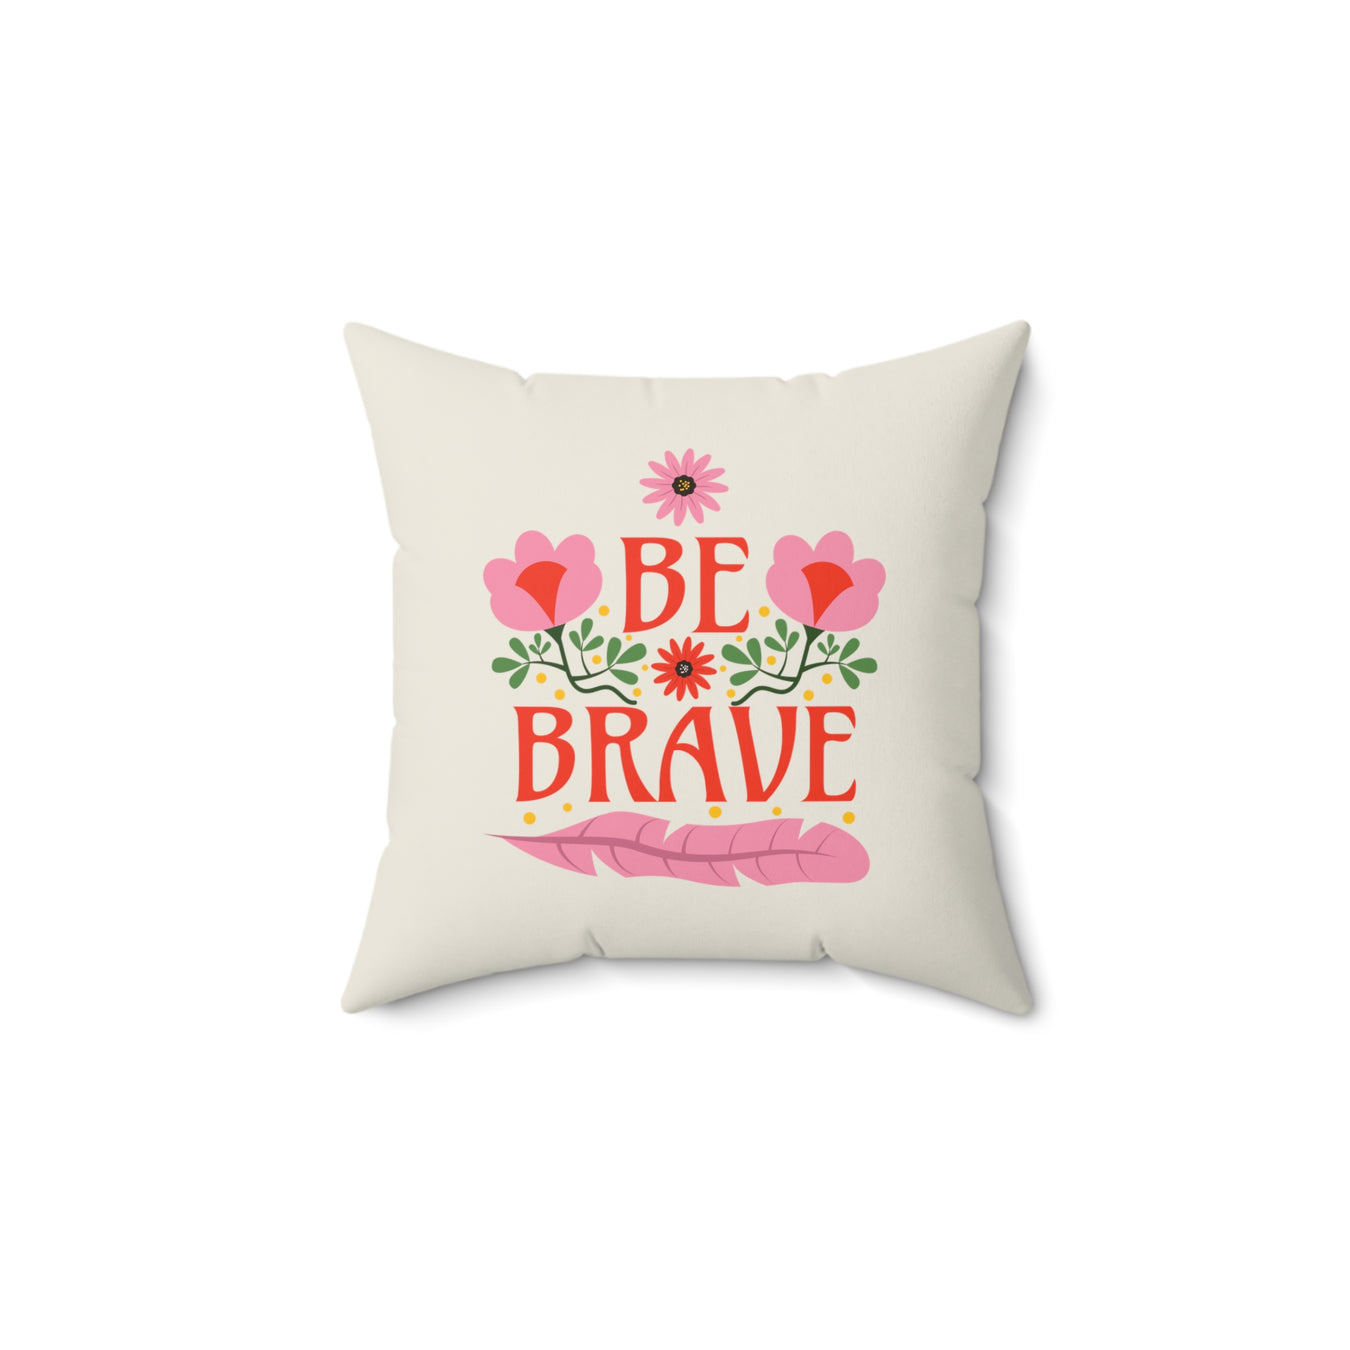 Self-Love Pillows